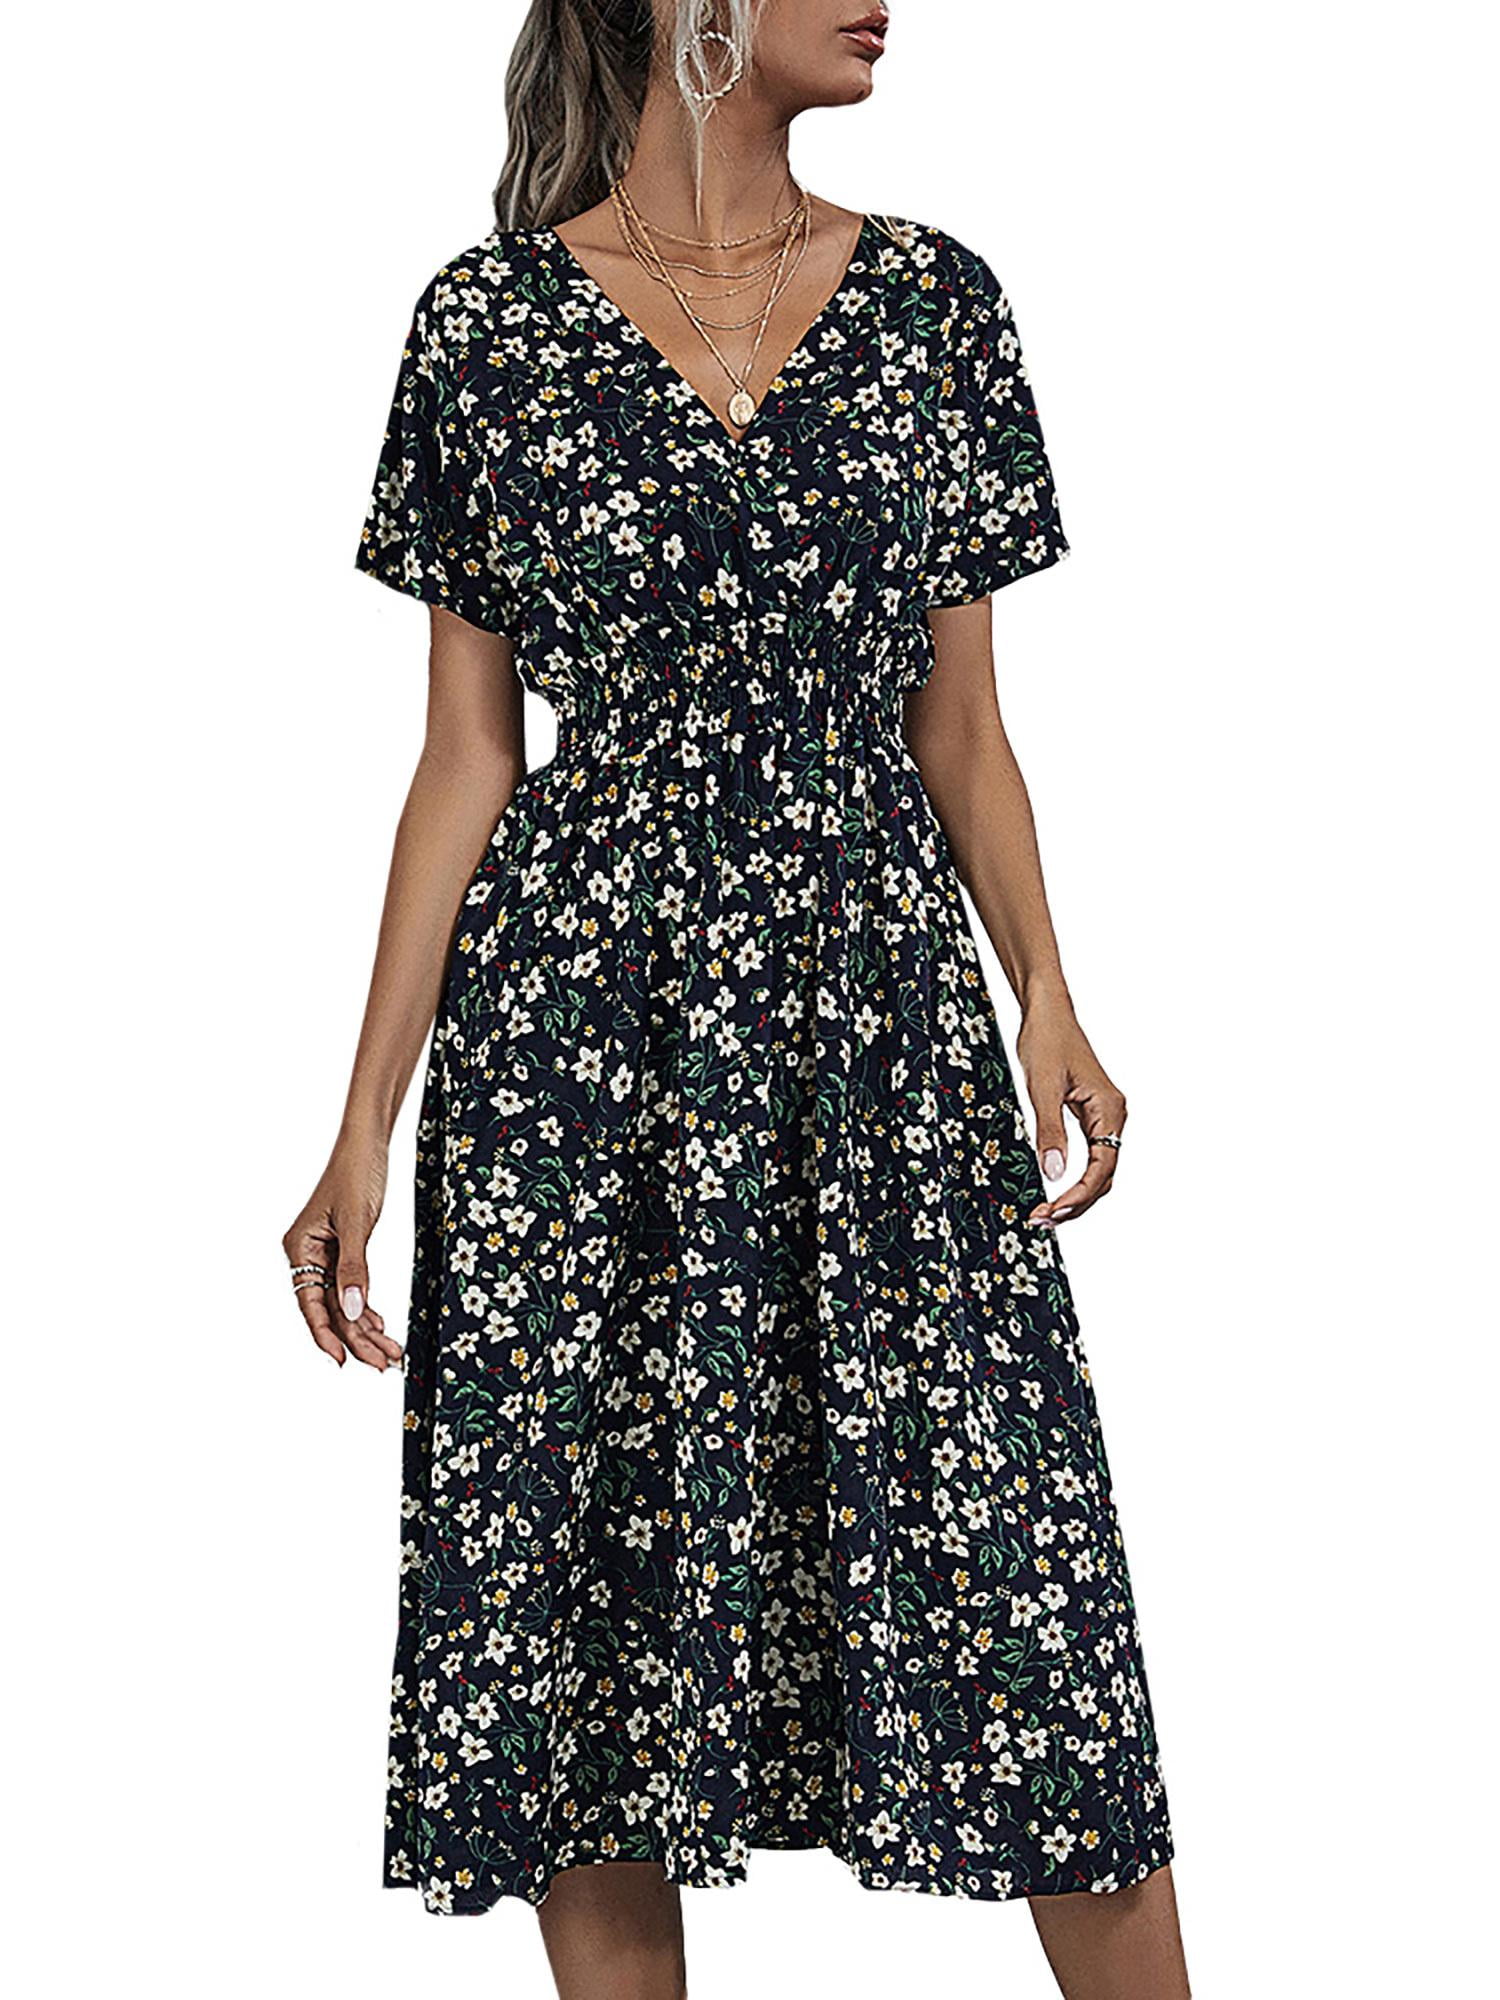 LAPA Women's Bohemian Printed Loose Flowy Summer Casual Dress - Walmart.com